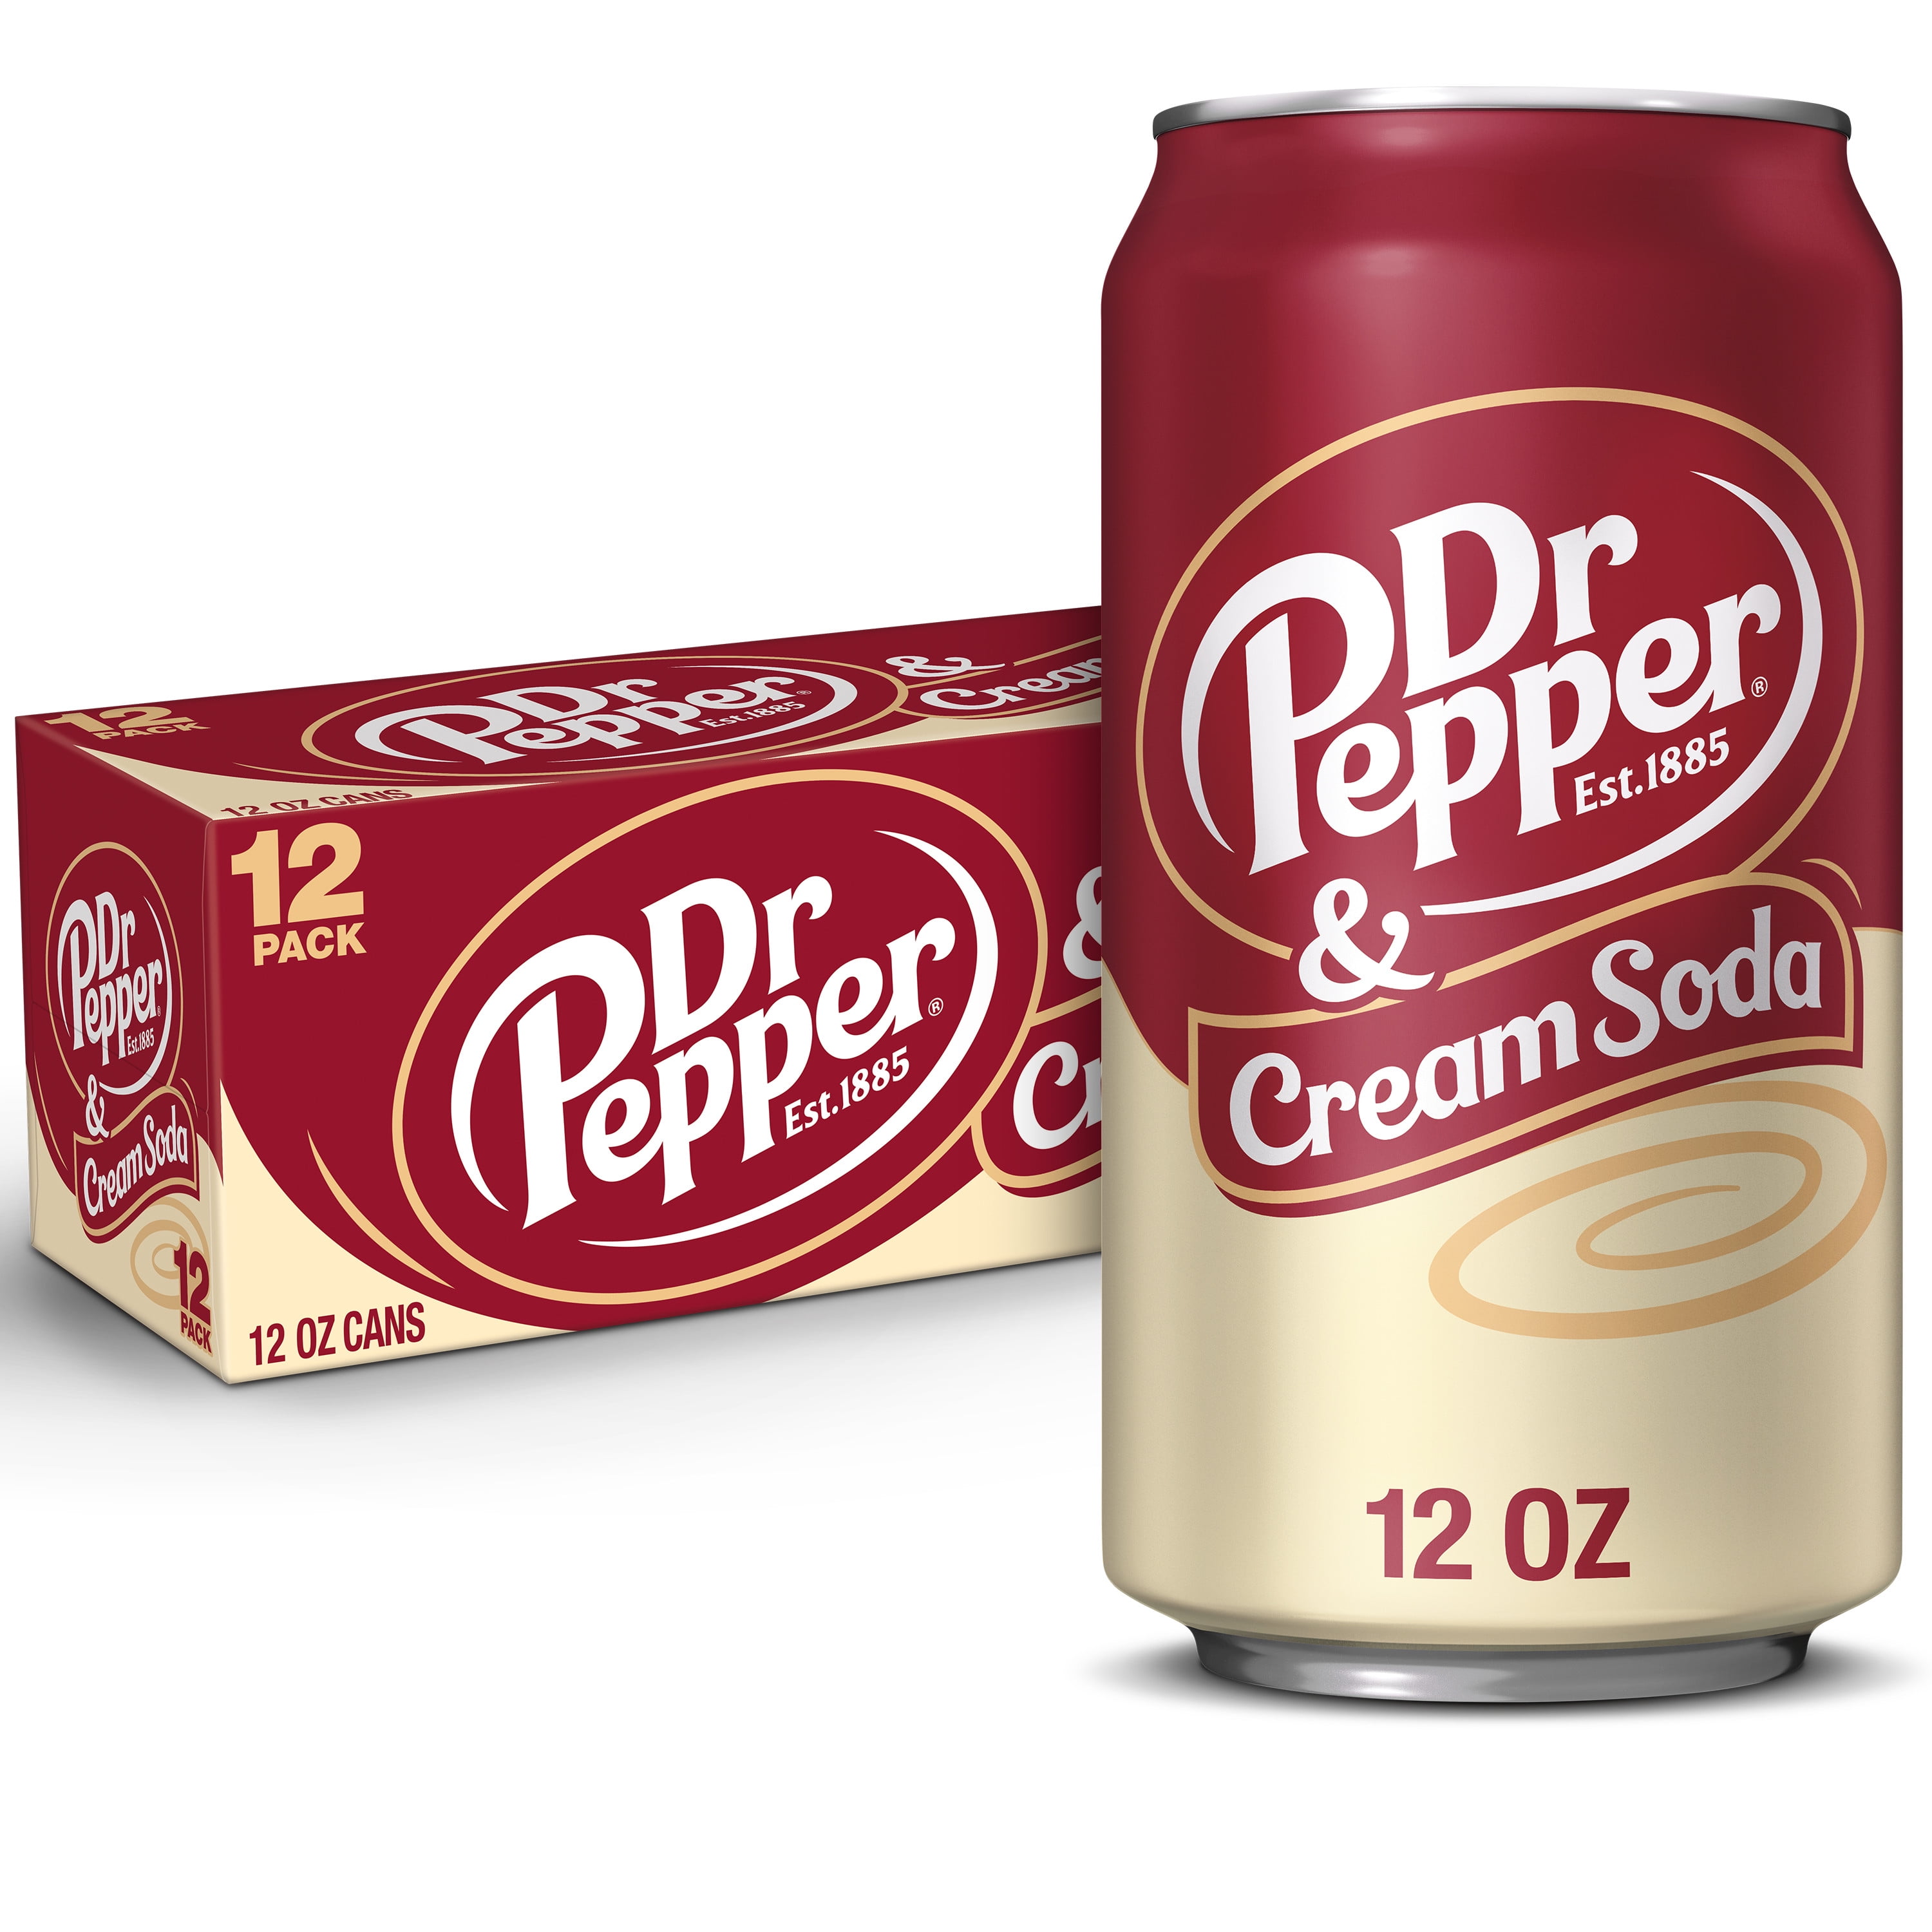 Pepper cream. Доктор Пеппер крем сода. Dr. Pepper Cream Soda 355. Dr. Pepper Cream Soda 355мл *12 США. Доктор Пеппер напиток.